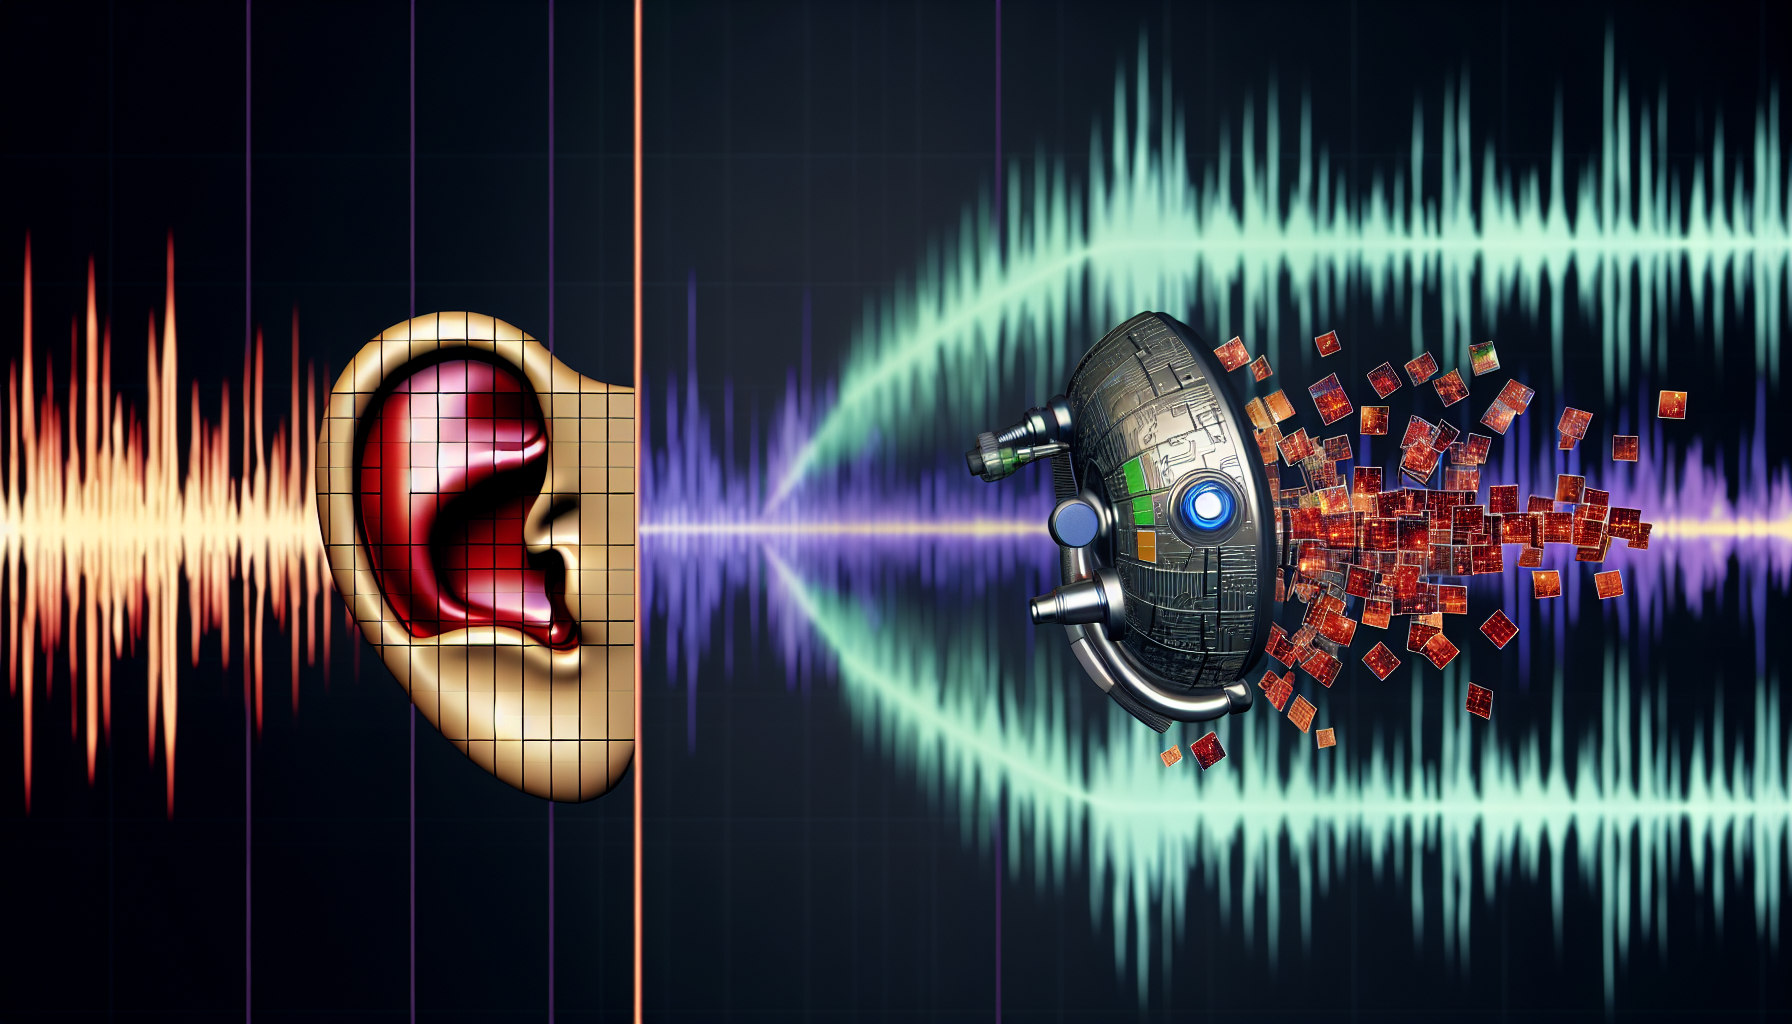 McAfee Launches AI Deepfake Audio Detection Tool